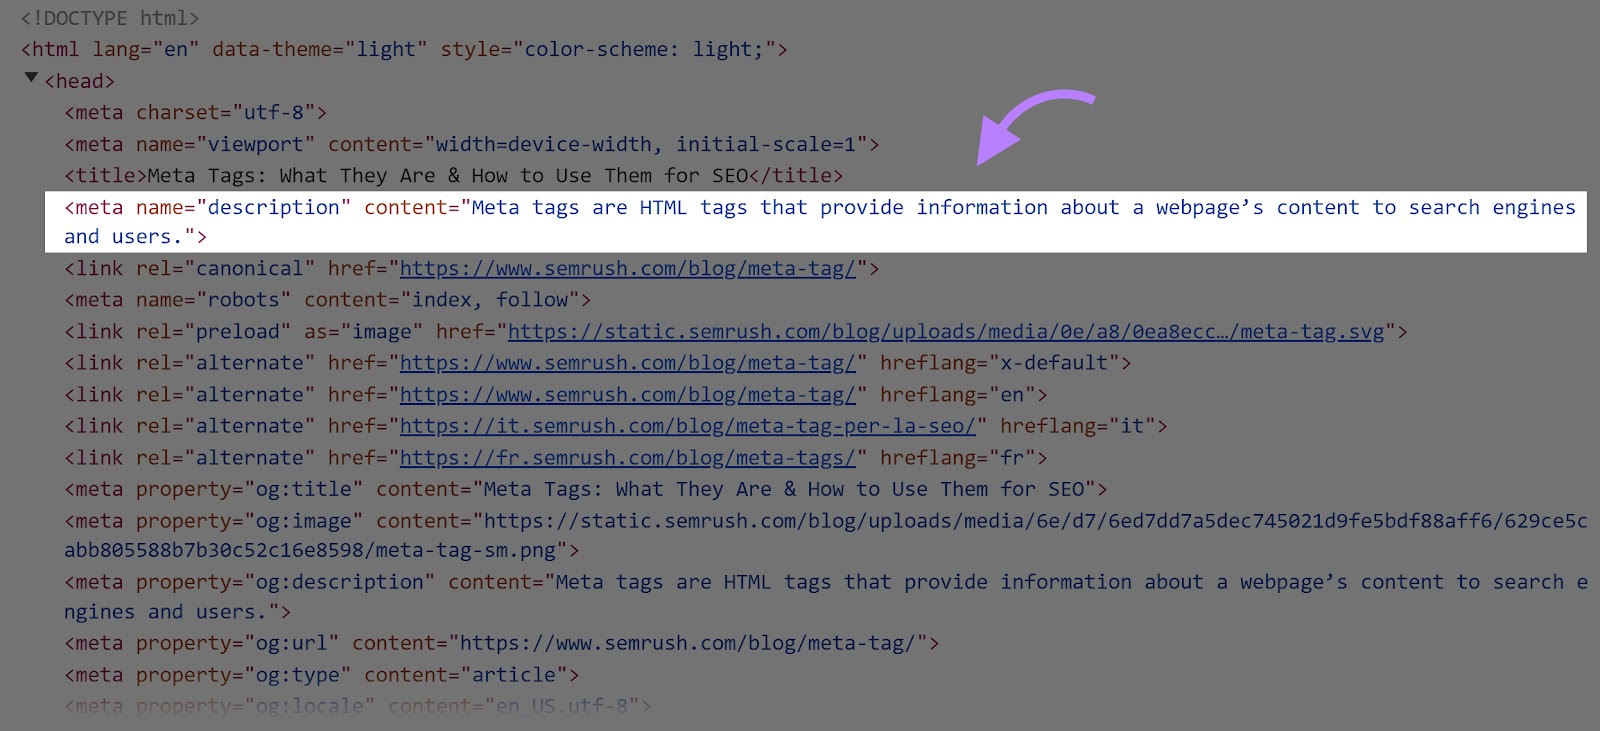 Meta statement  tag shown successful  the HTML codification  of a Semrush article.